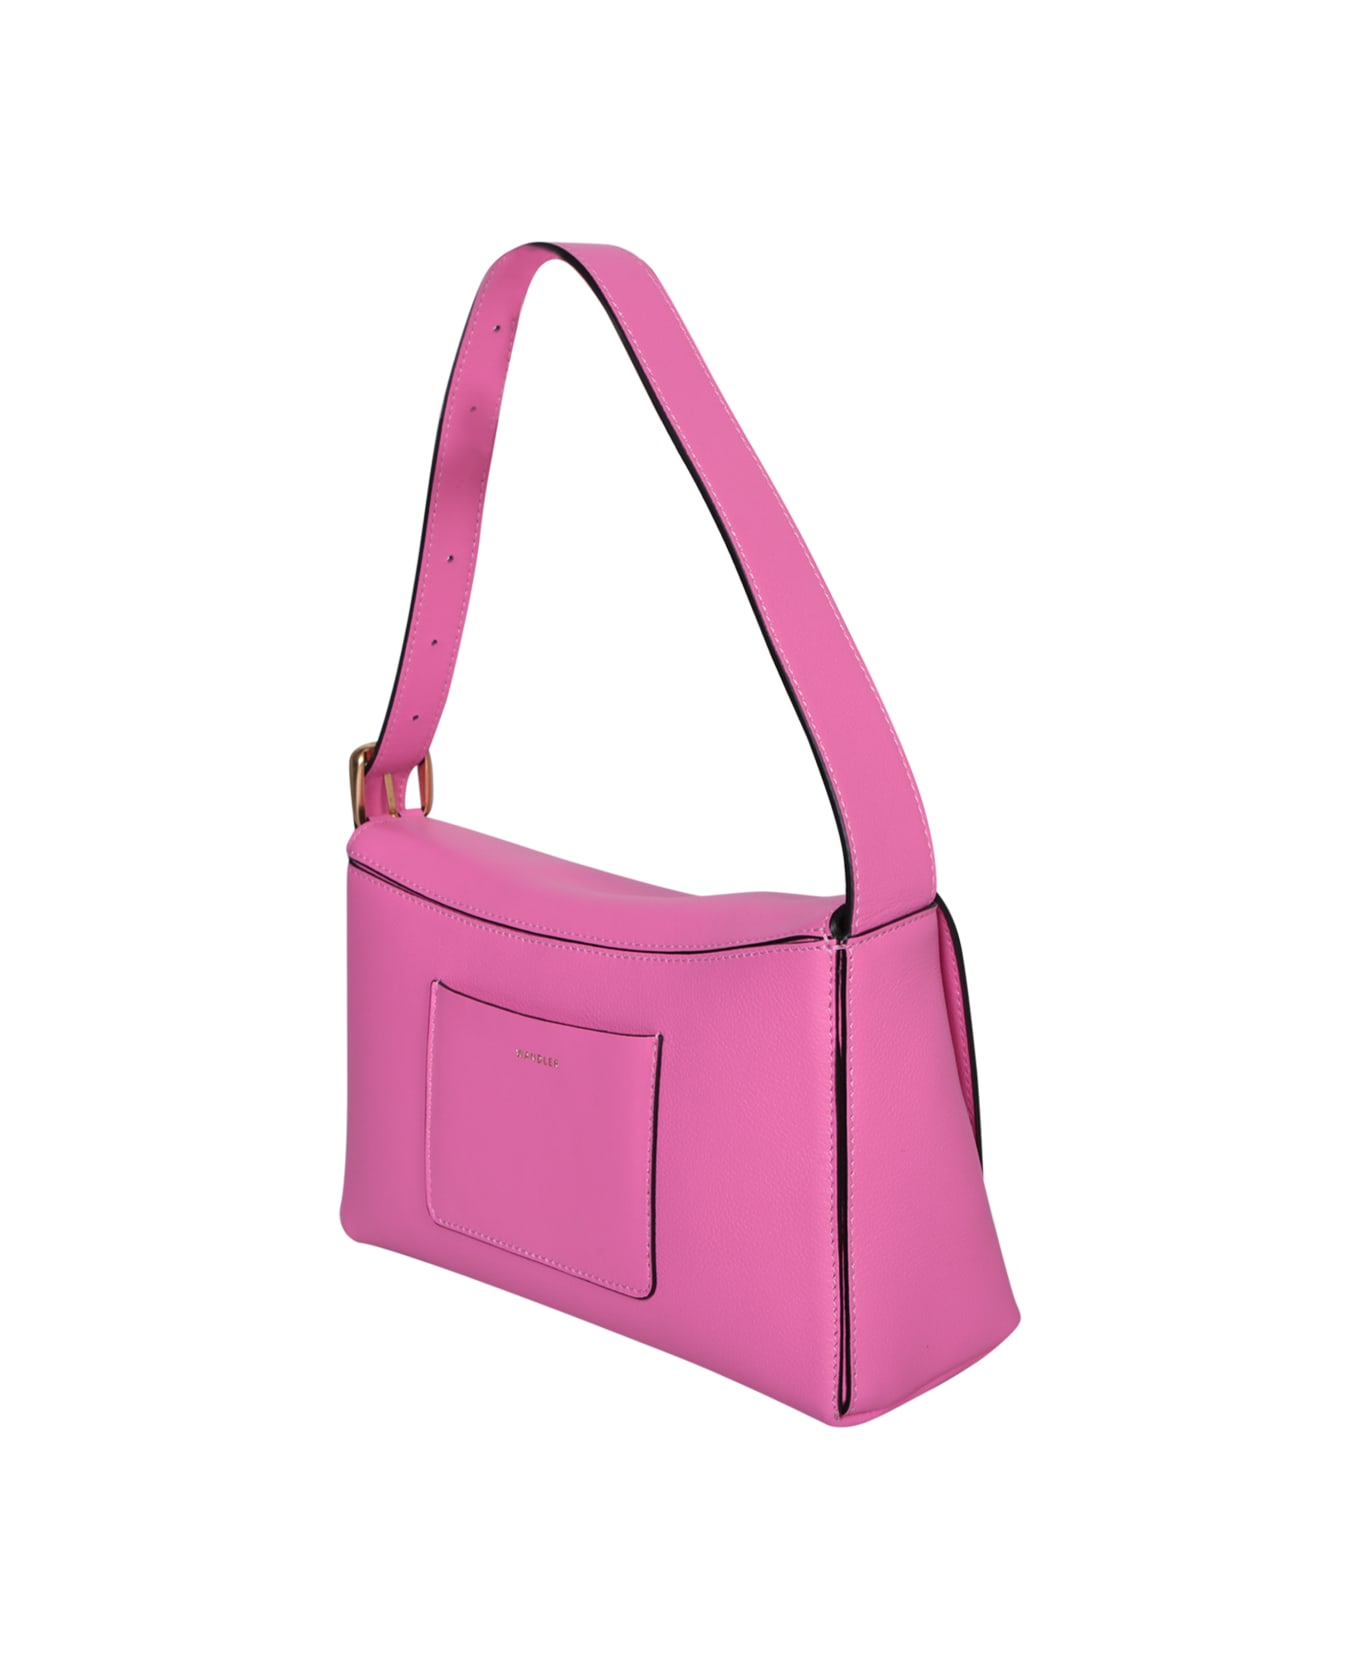 Wandler Orscar Baguette Pink Bag - Pink